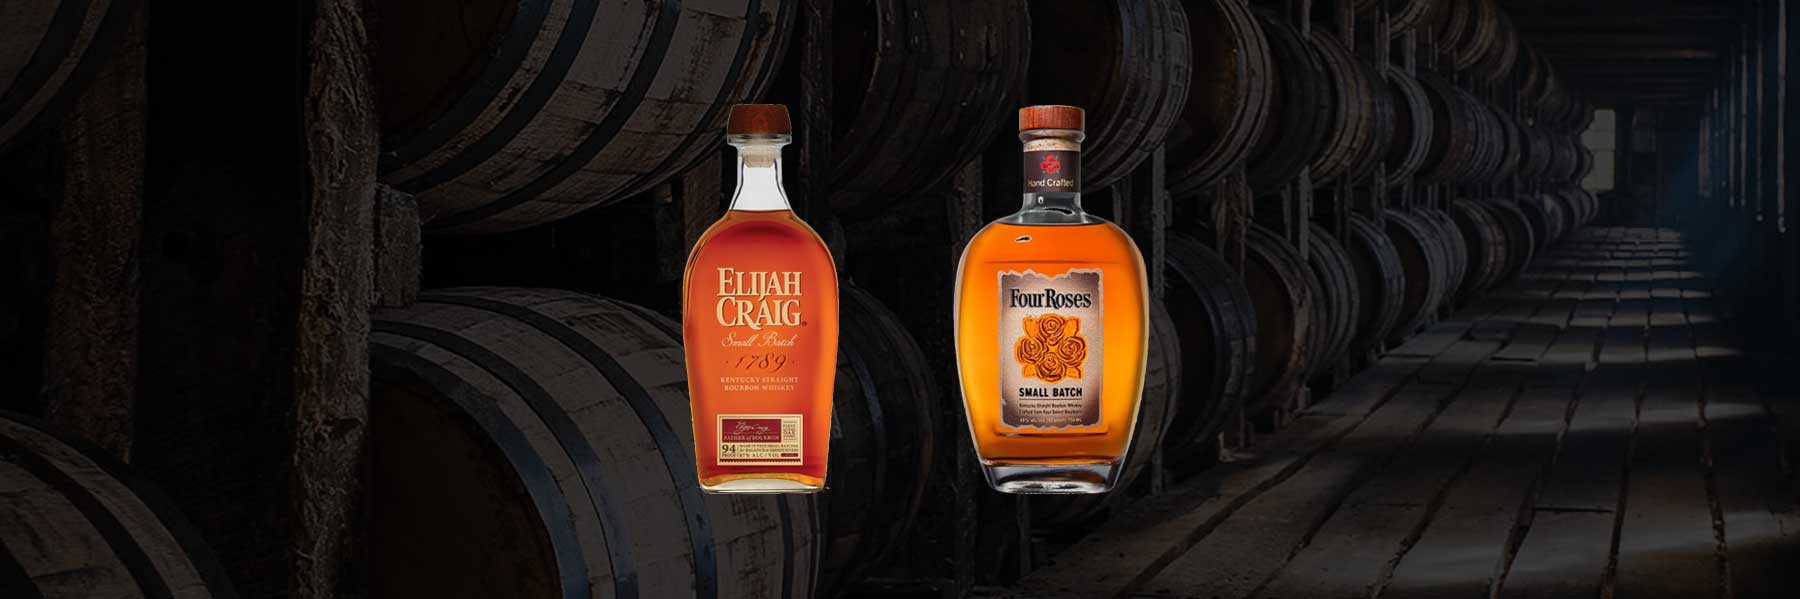 Elijah Craig vs Four Roses | Which small batch bottle is best?